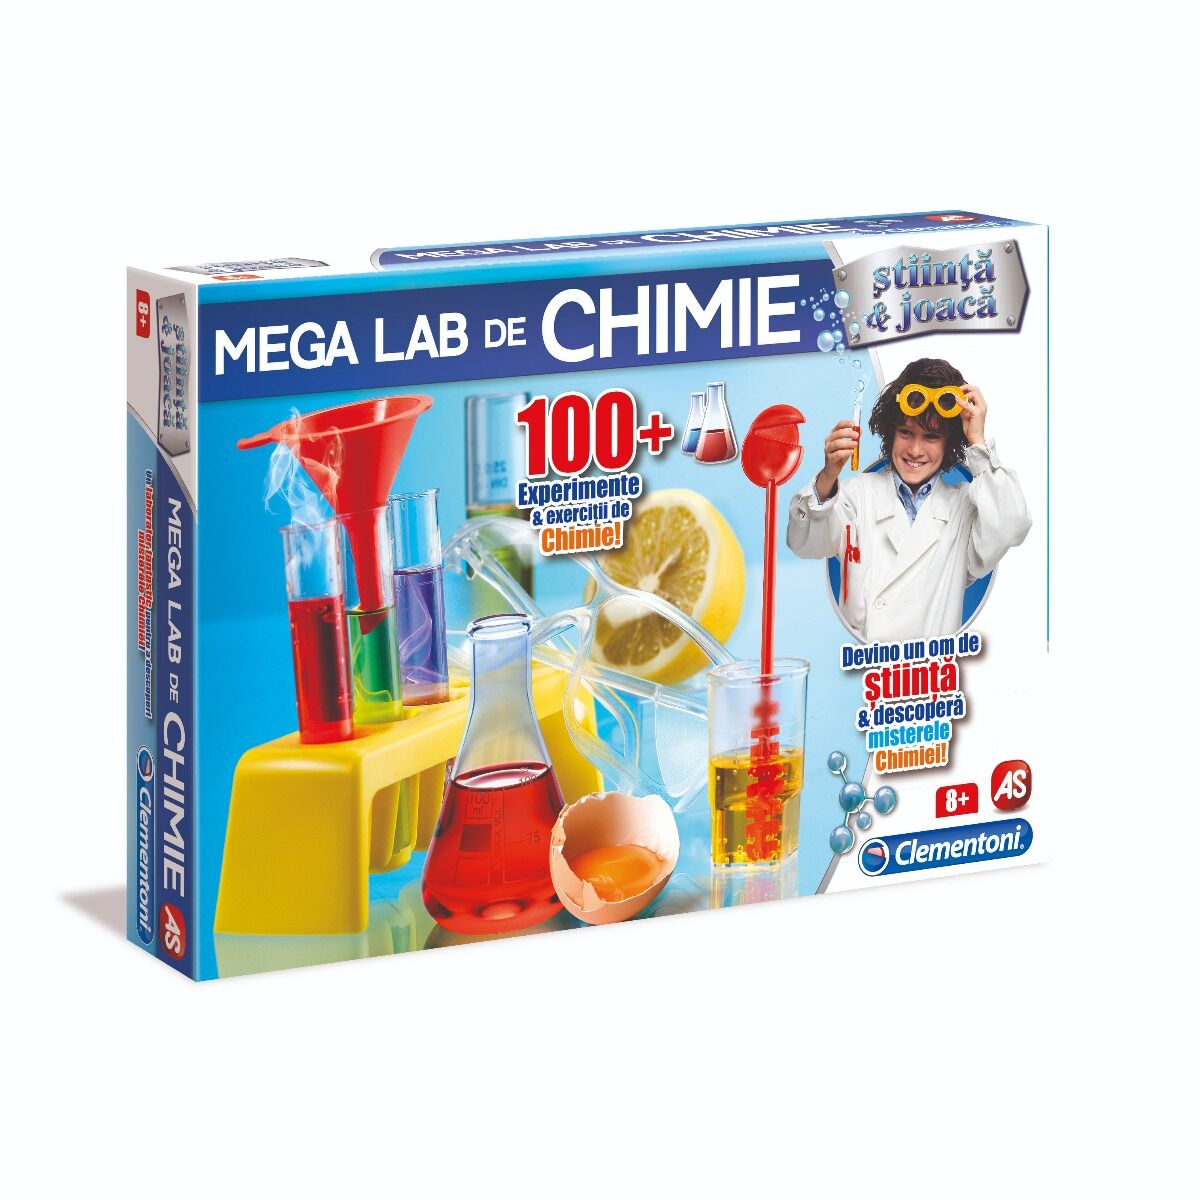 Mega Lab de chimie- Stiinta & joaca, Clementoni